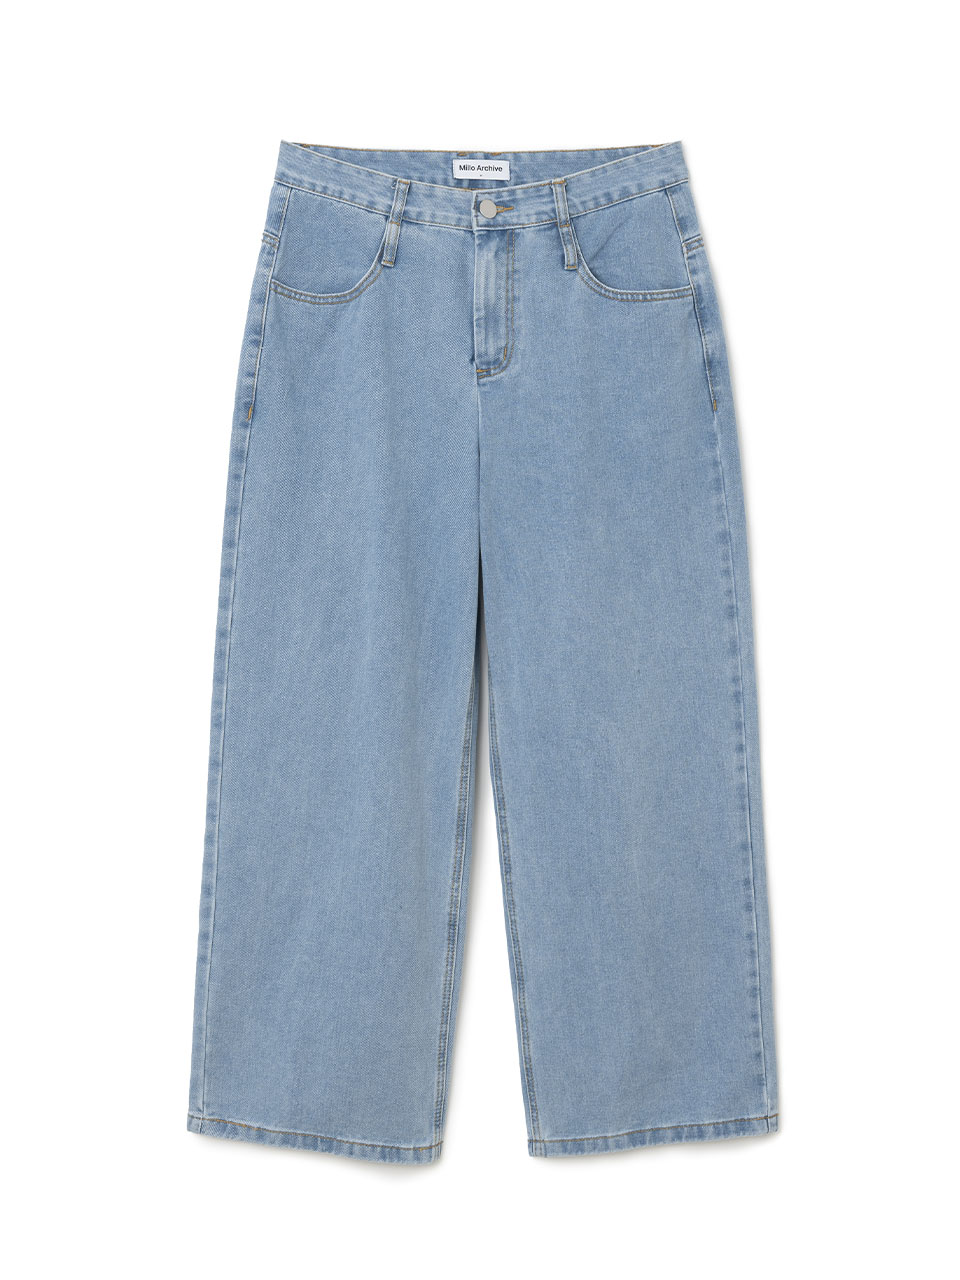 Standard Fit Denim Pants [Light Blue]